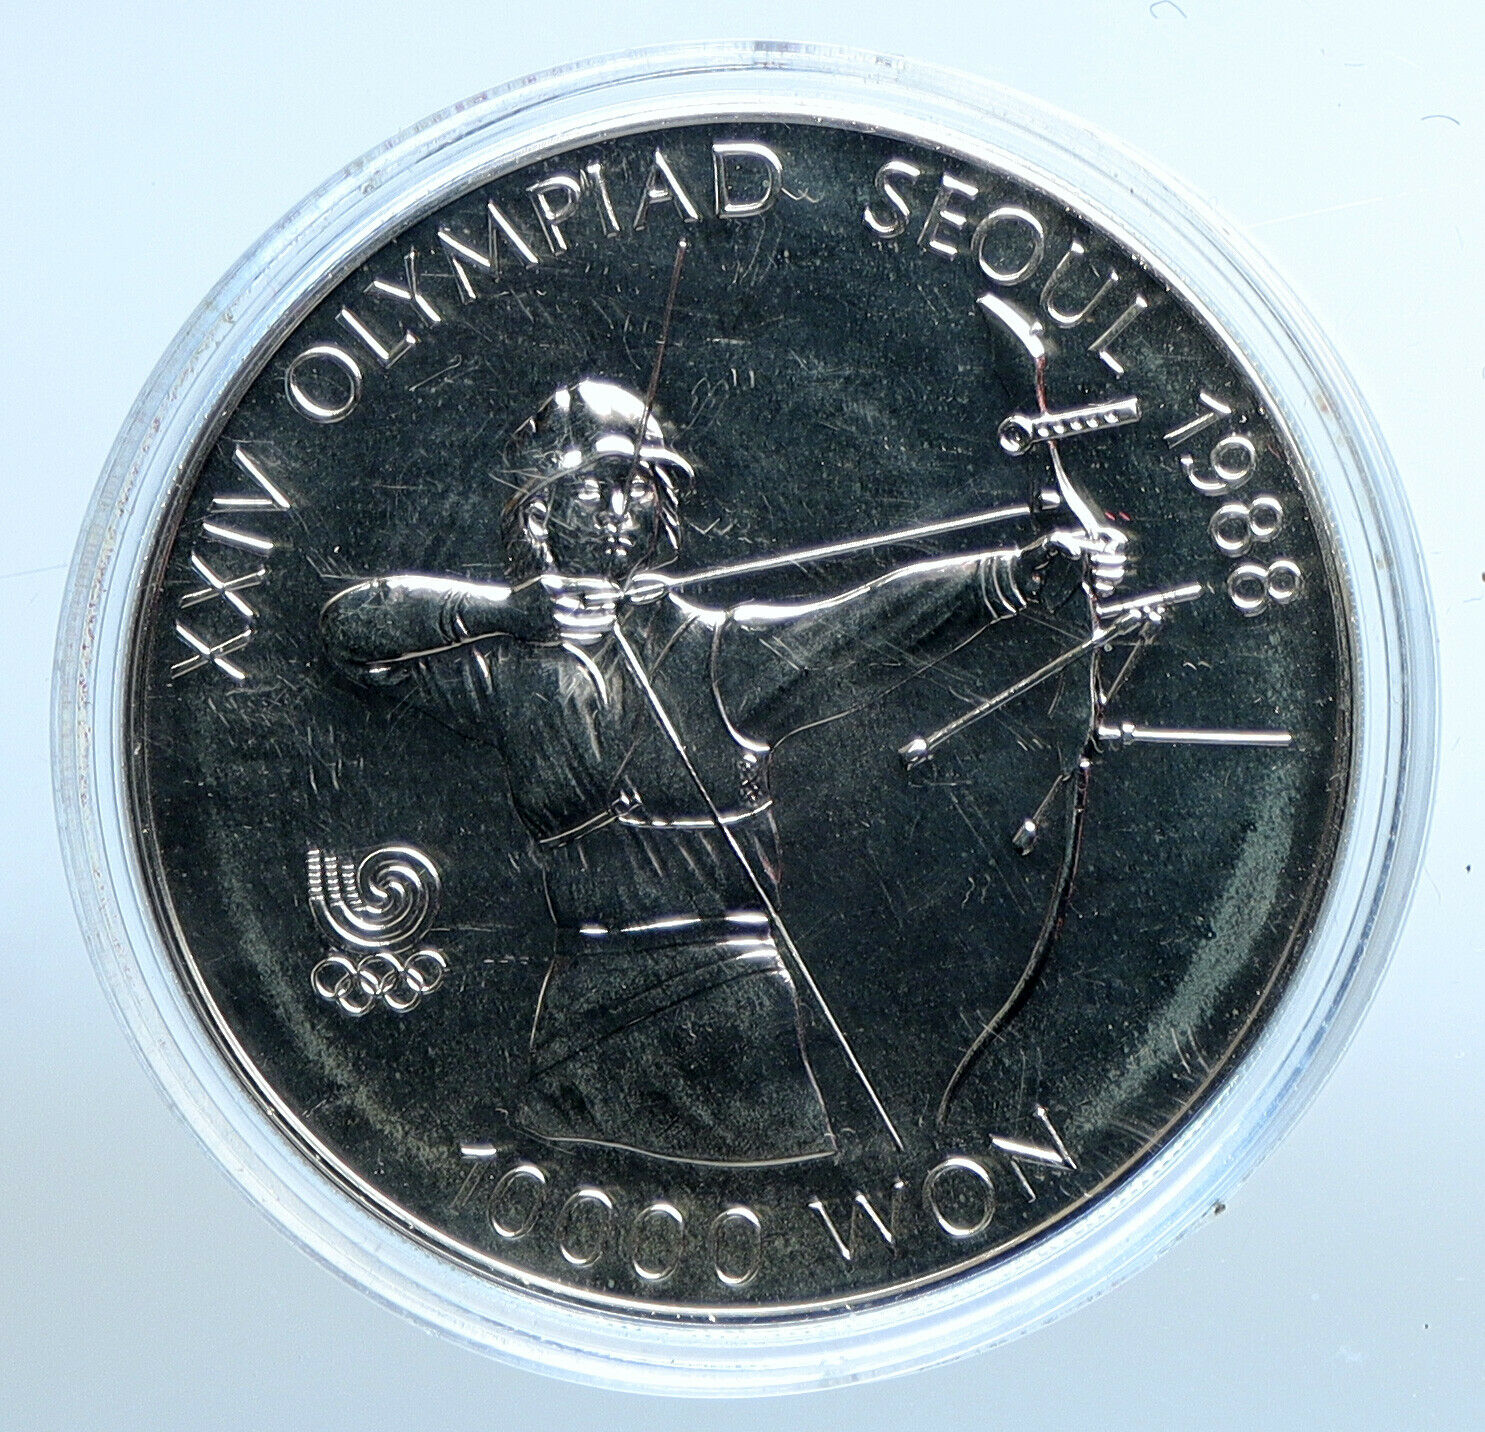 1987 SOUTH KOREA Seoul OLYMPICS Girl ARCHERY PFL Silver 10000 Won Coin i111174